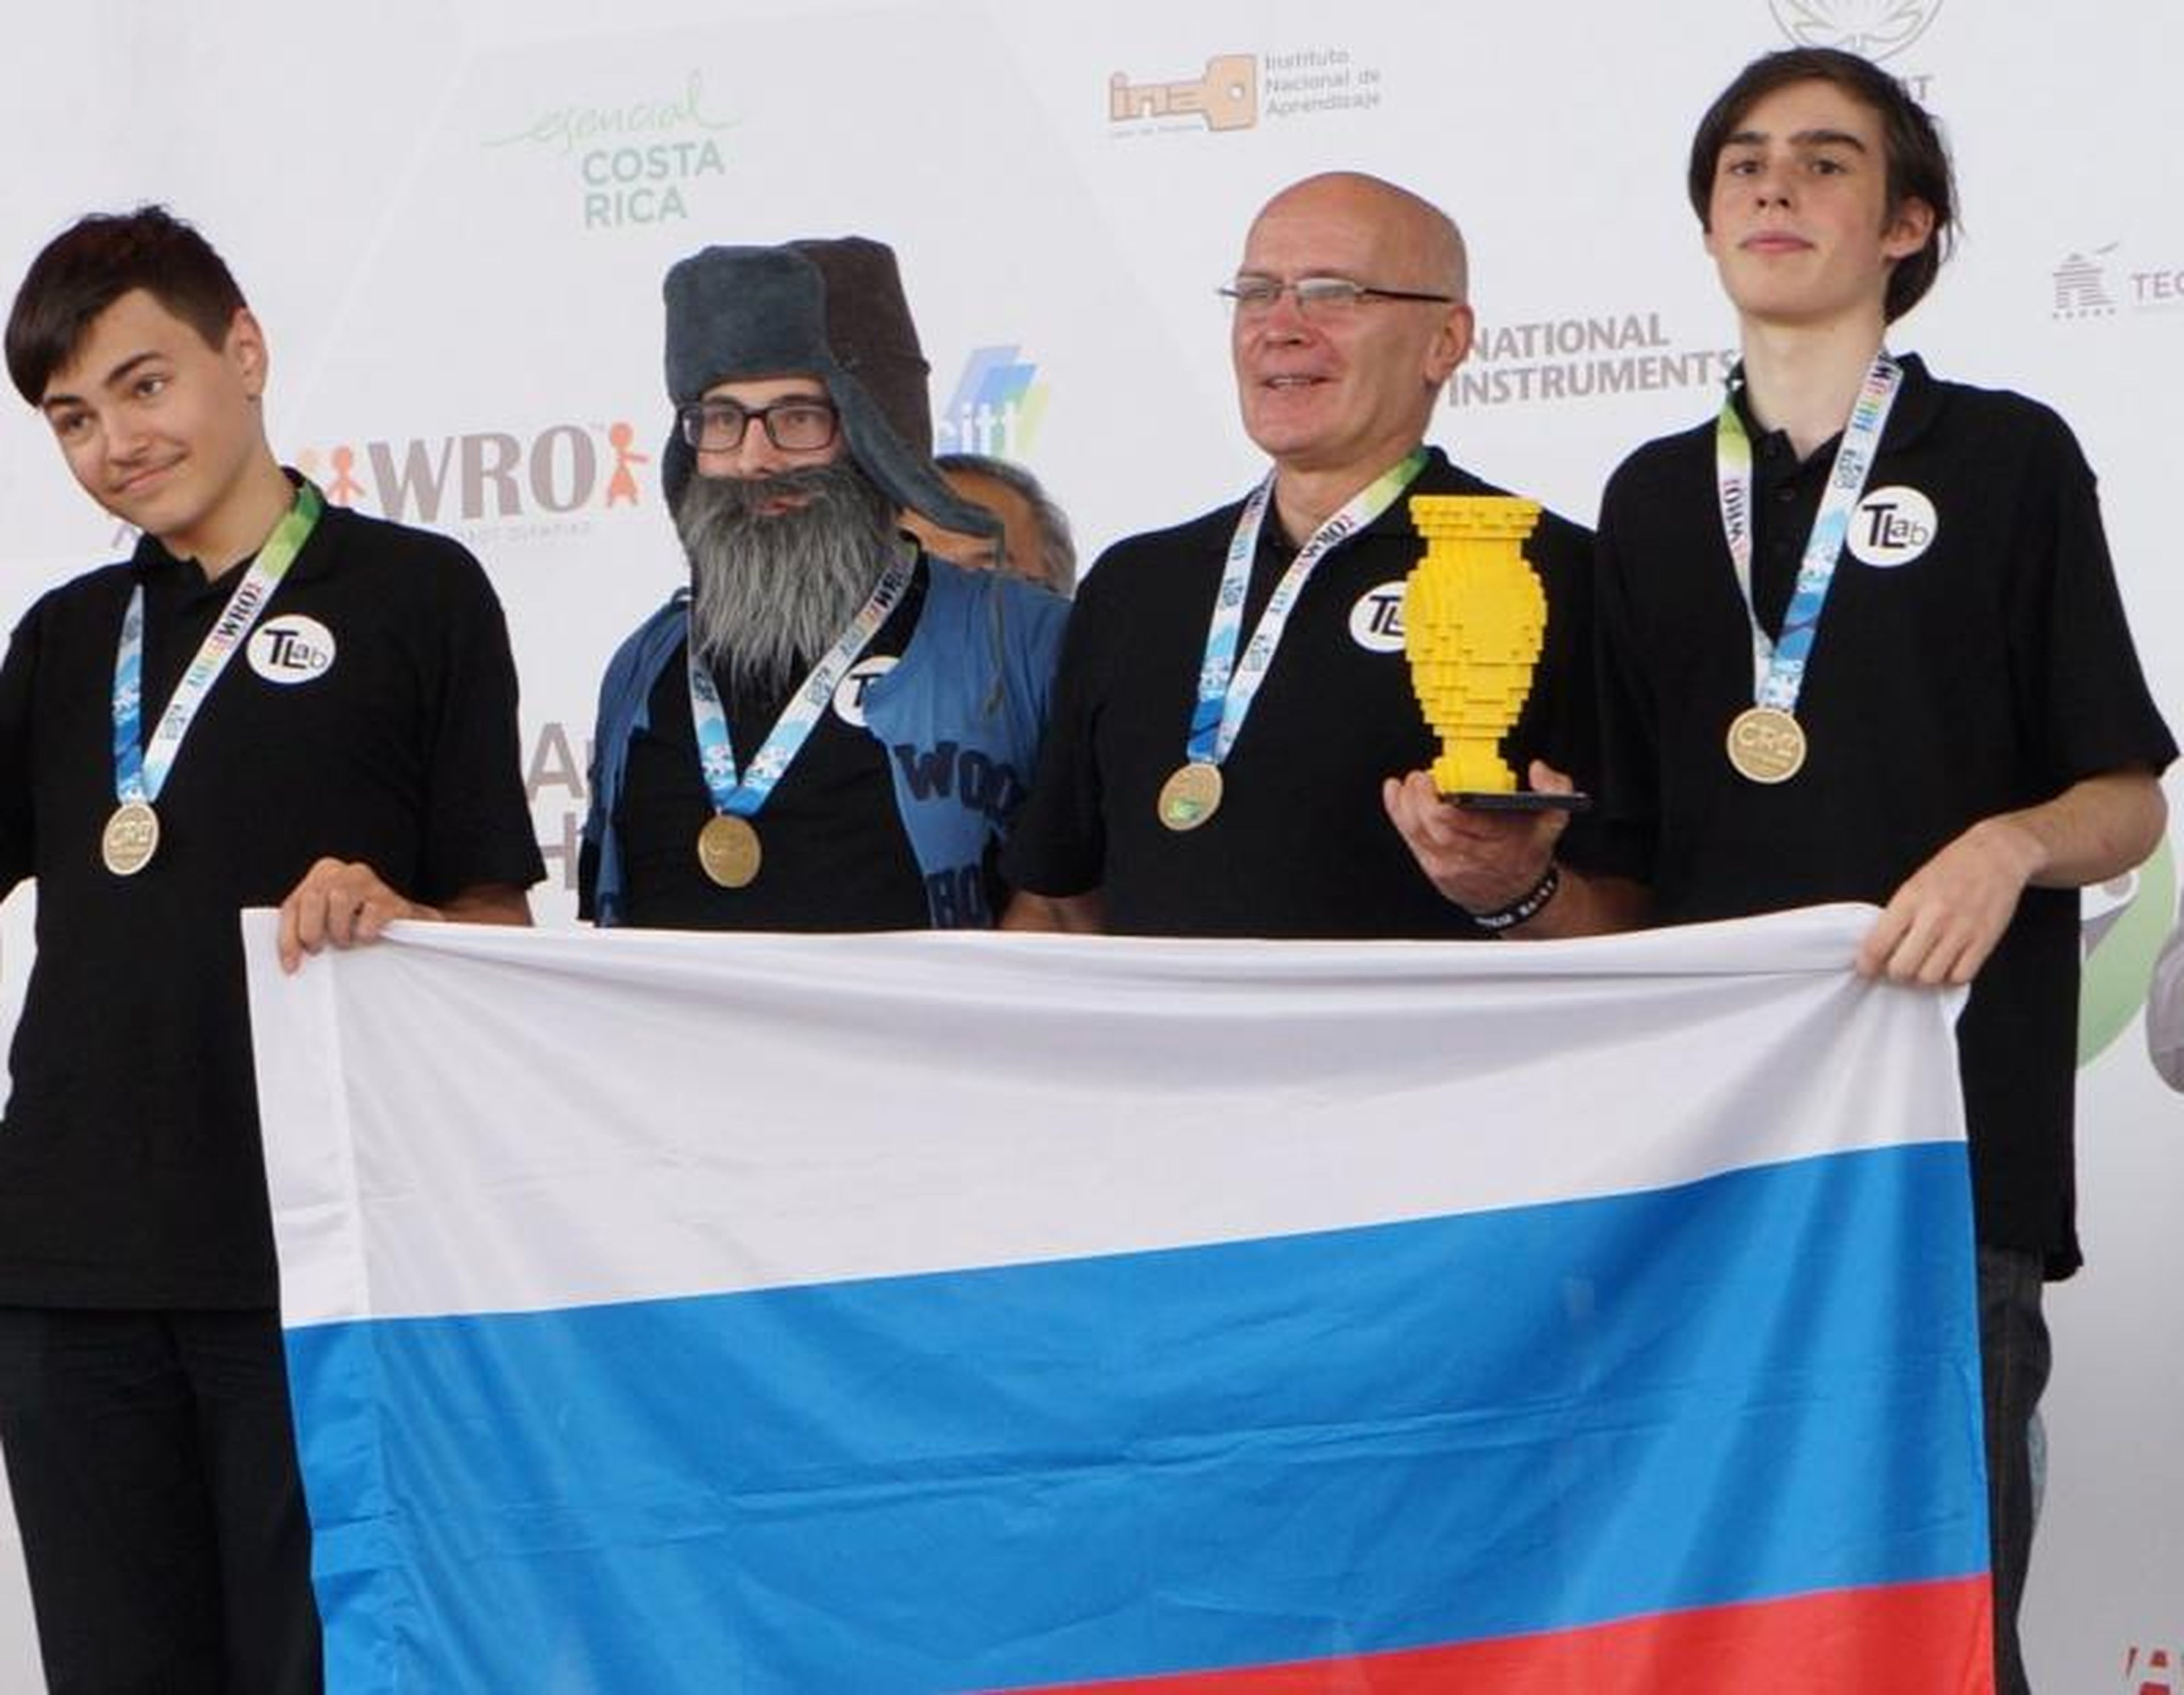 Left to right: Maksim Mikhailov and his team: Daniil Nechaev, Igor Lositsky and Gleb Zagarskikh, as they accept the gold medal at the 2017 World Robot Olympiad.